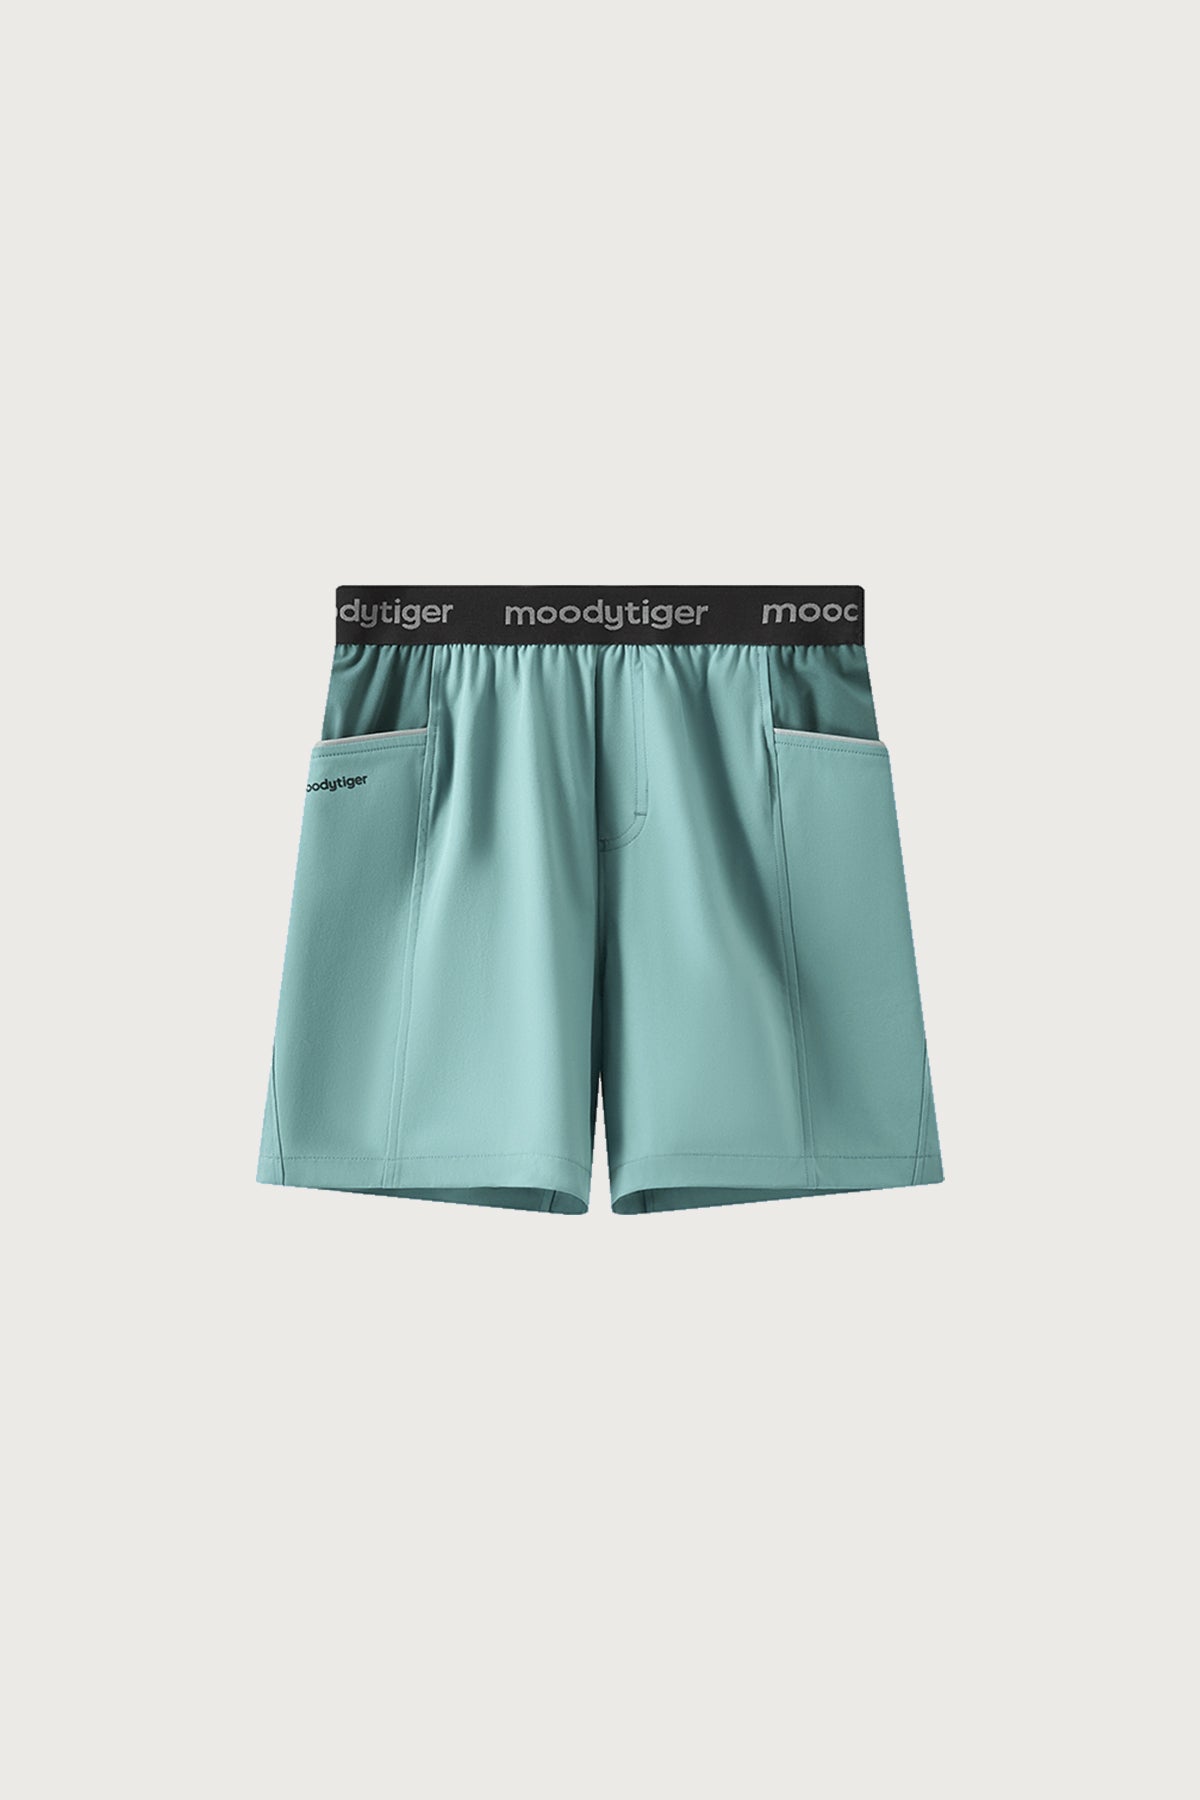 Outdoor Shorts**Sagebrush**